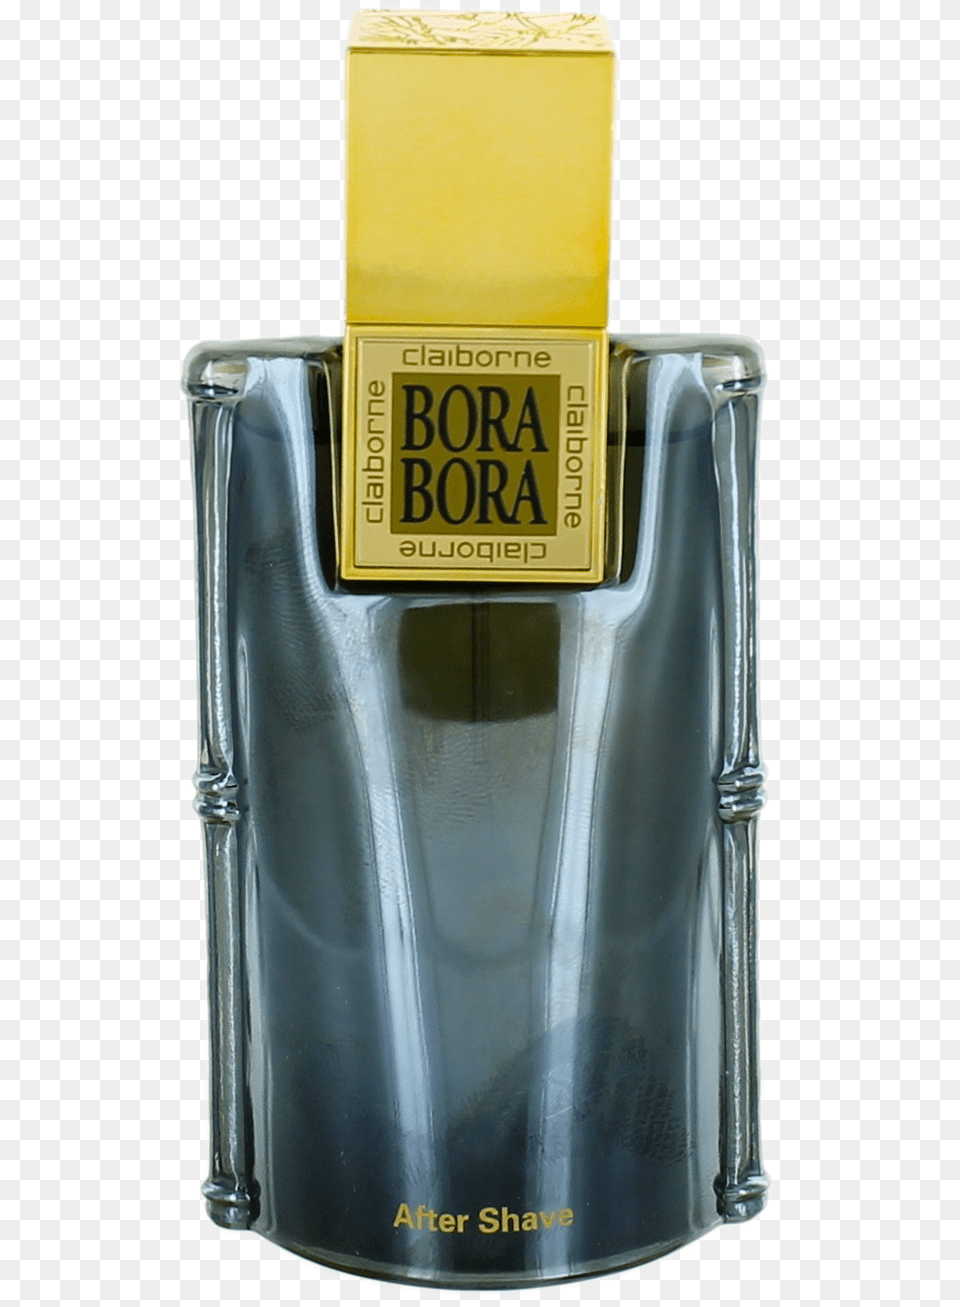 Bora Bora By Liz Claiborne For Men After Shave Spray Pint Glass, Bottle, Aftershave Png Image